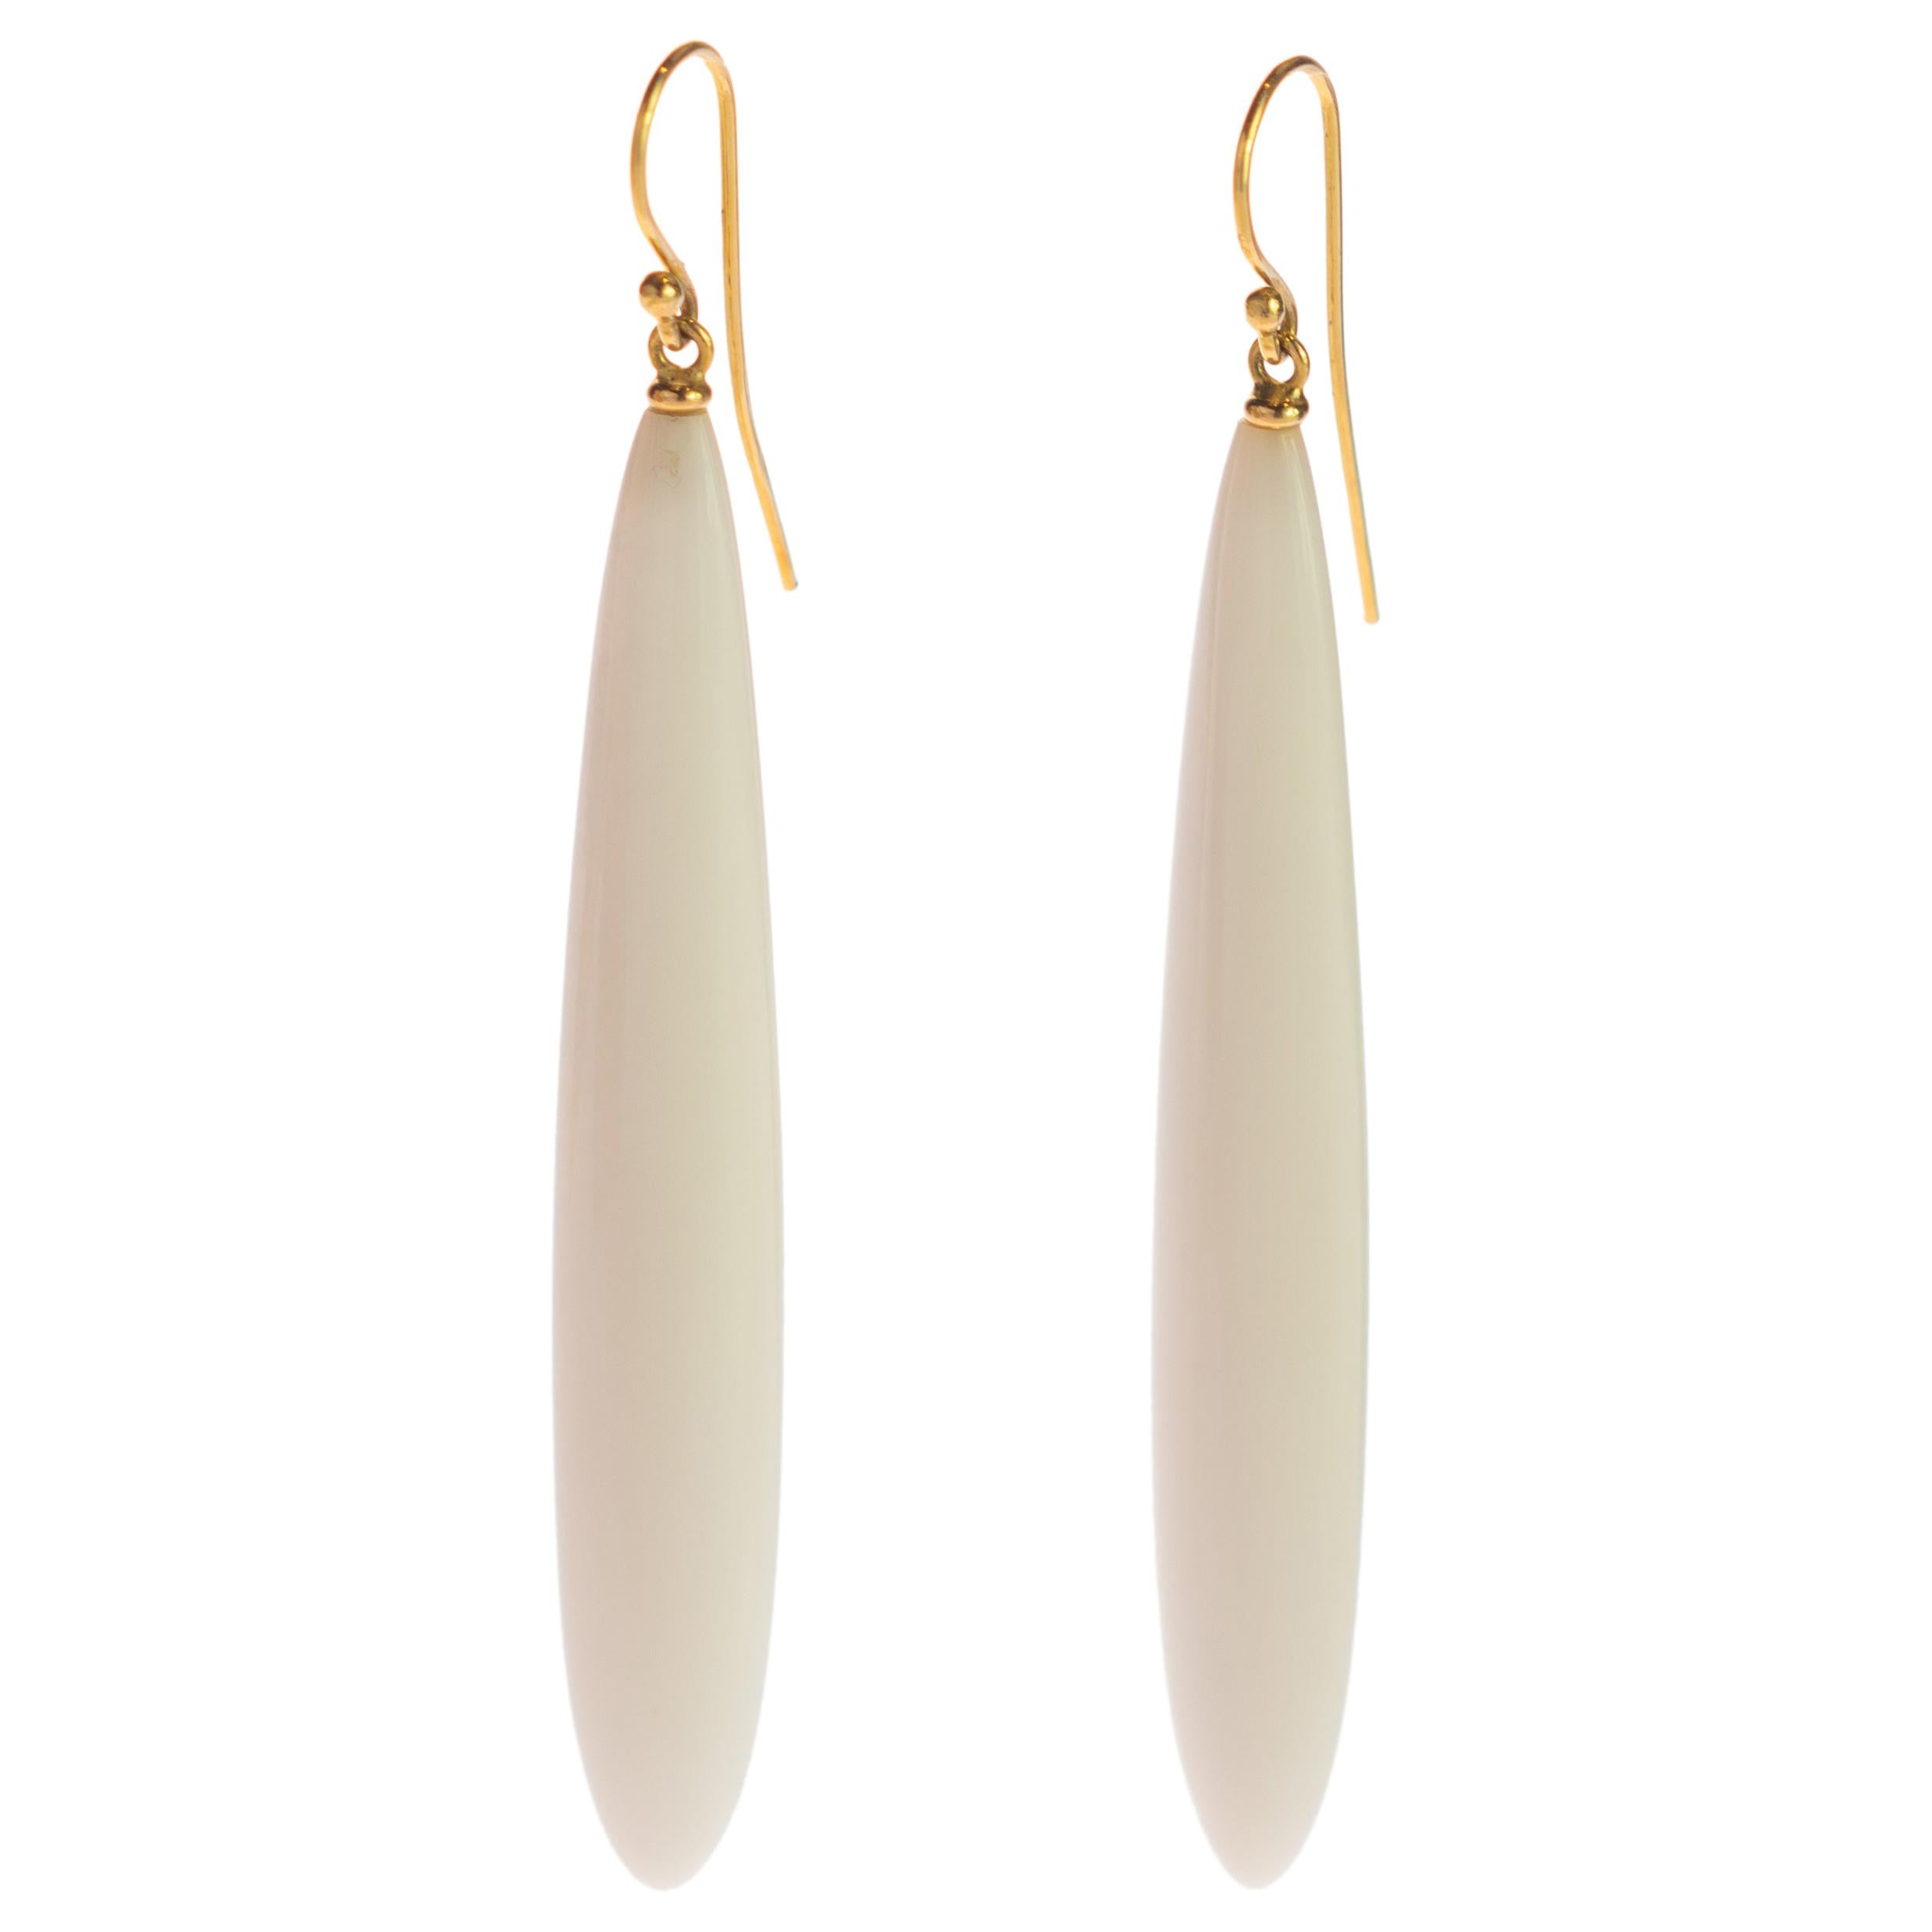 Natural Agate White Drops 18 Karat Yellow Gold Long Sharp Flat Dangle Earrings